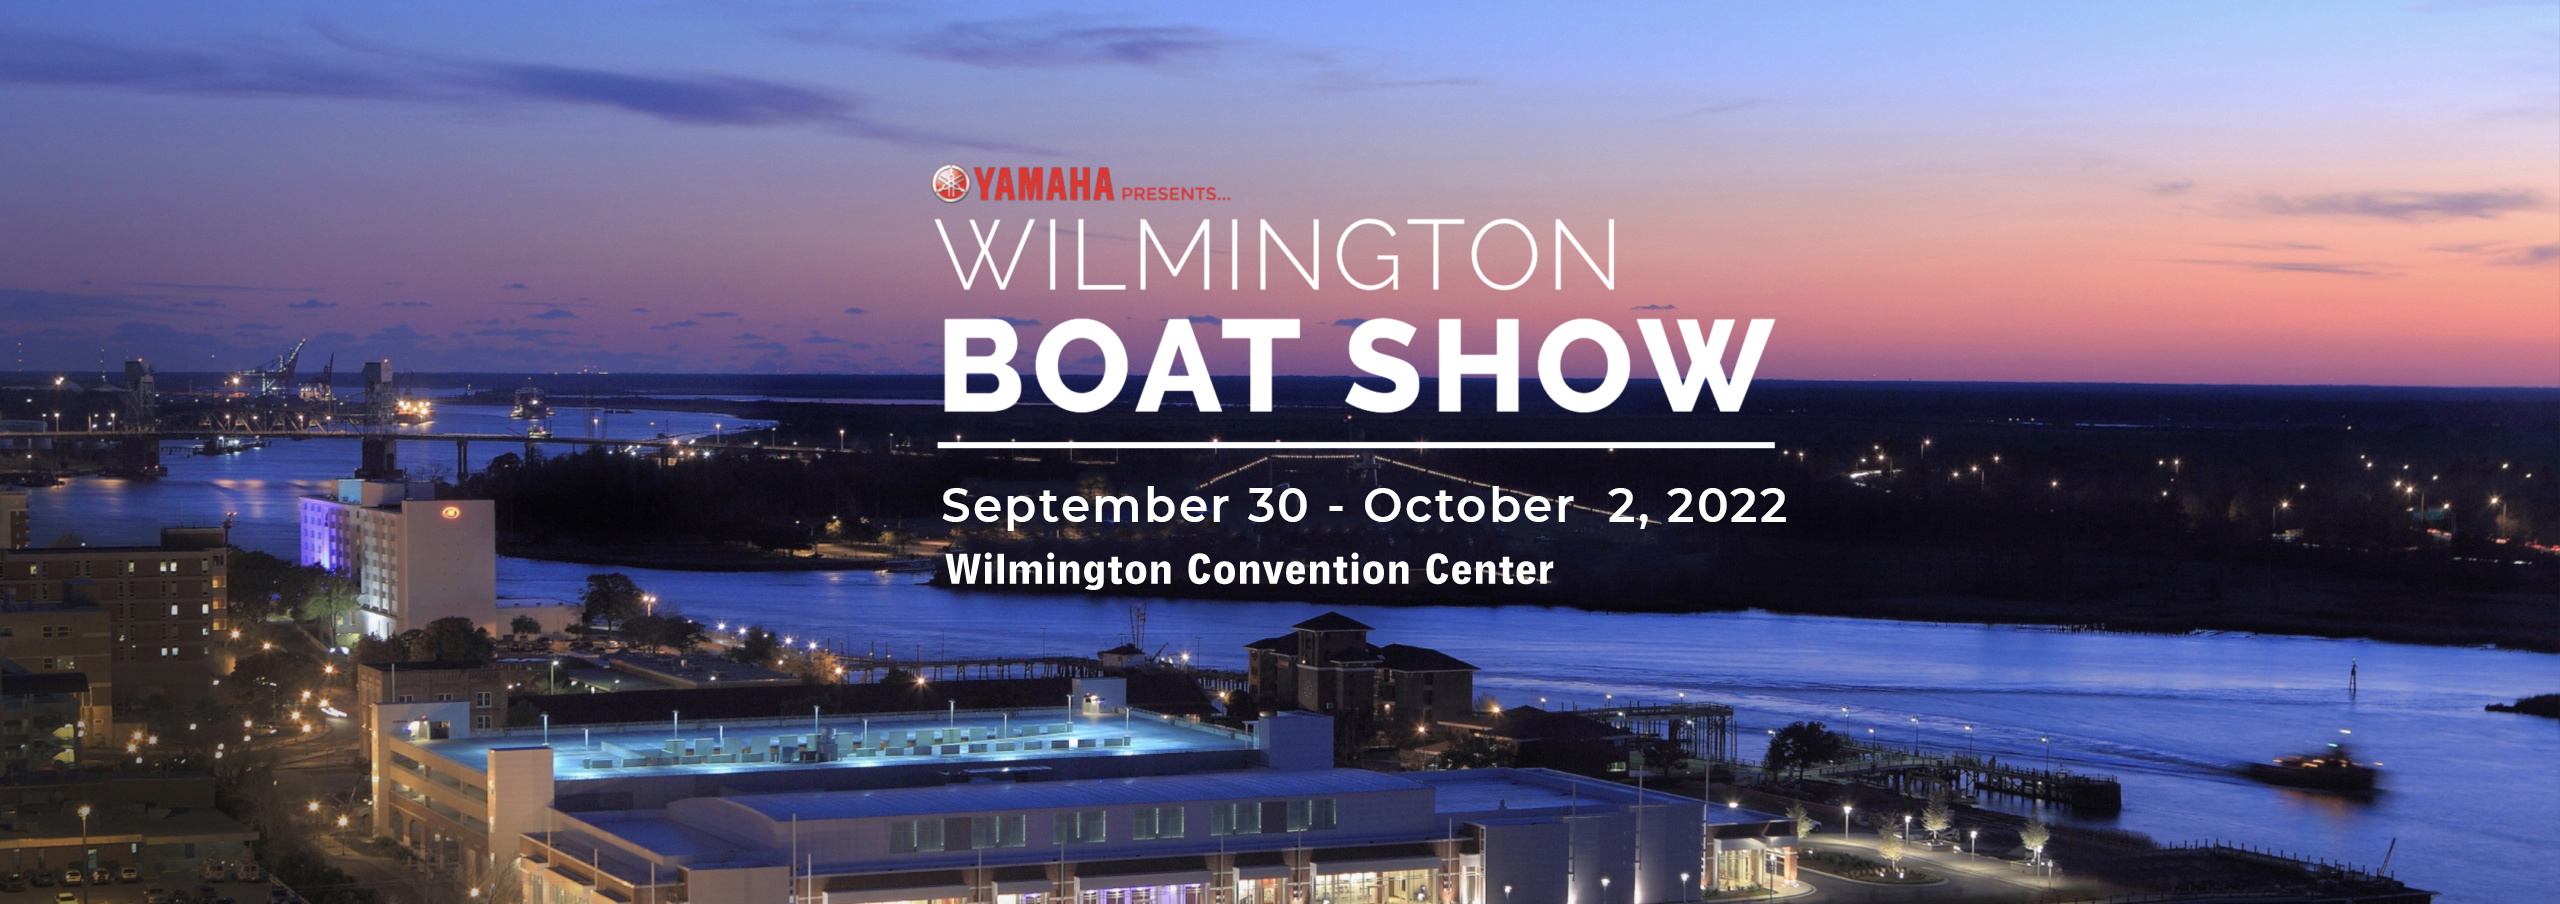 2022 Wilmington Boat Show